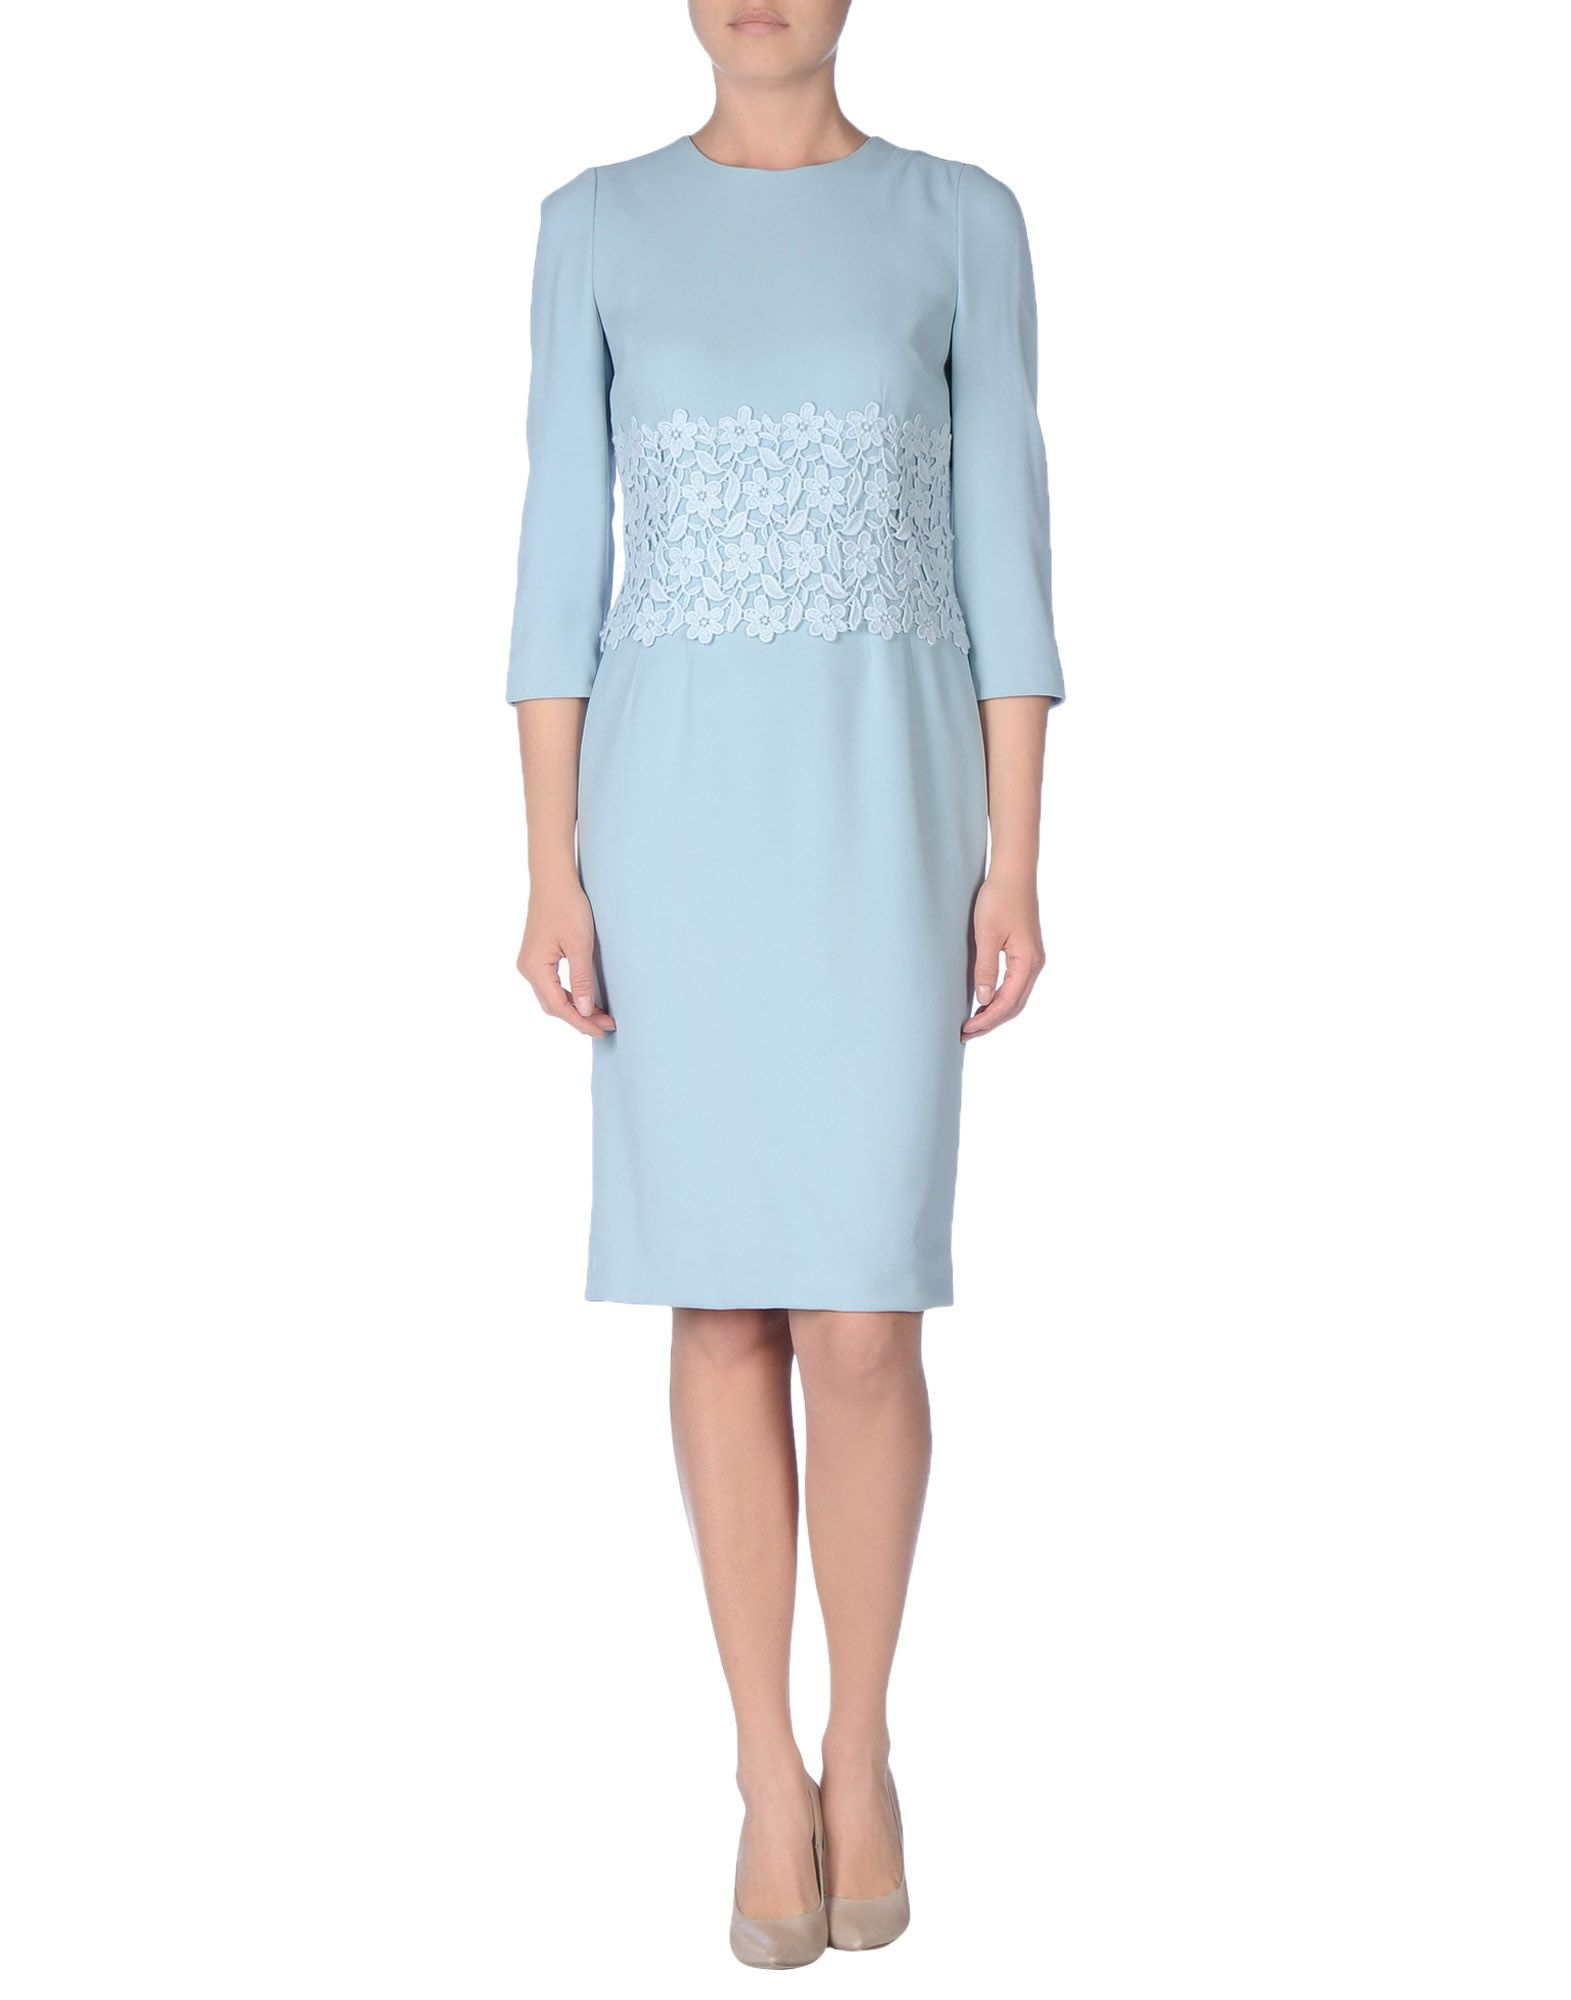 Dolce & gabbana Knee-length Dress in Blue (Sky blue) | Lyst